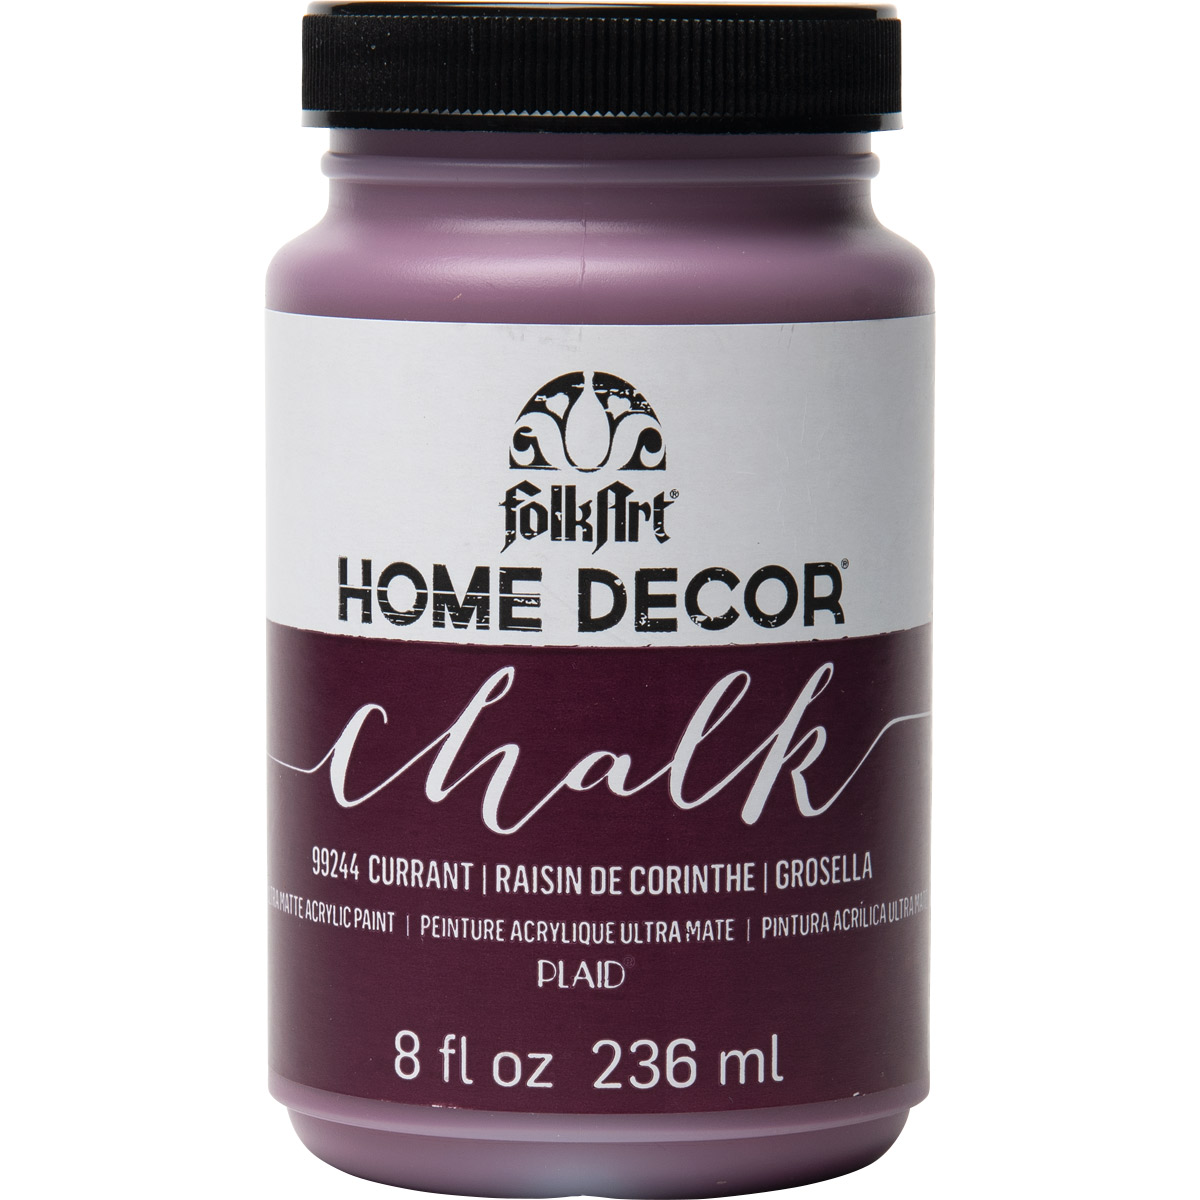 FolkArt Home Decor Chalk - Currant, 8 oz. - 99244